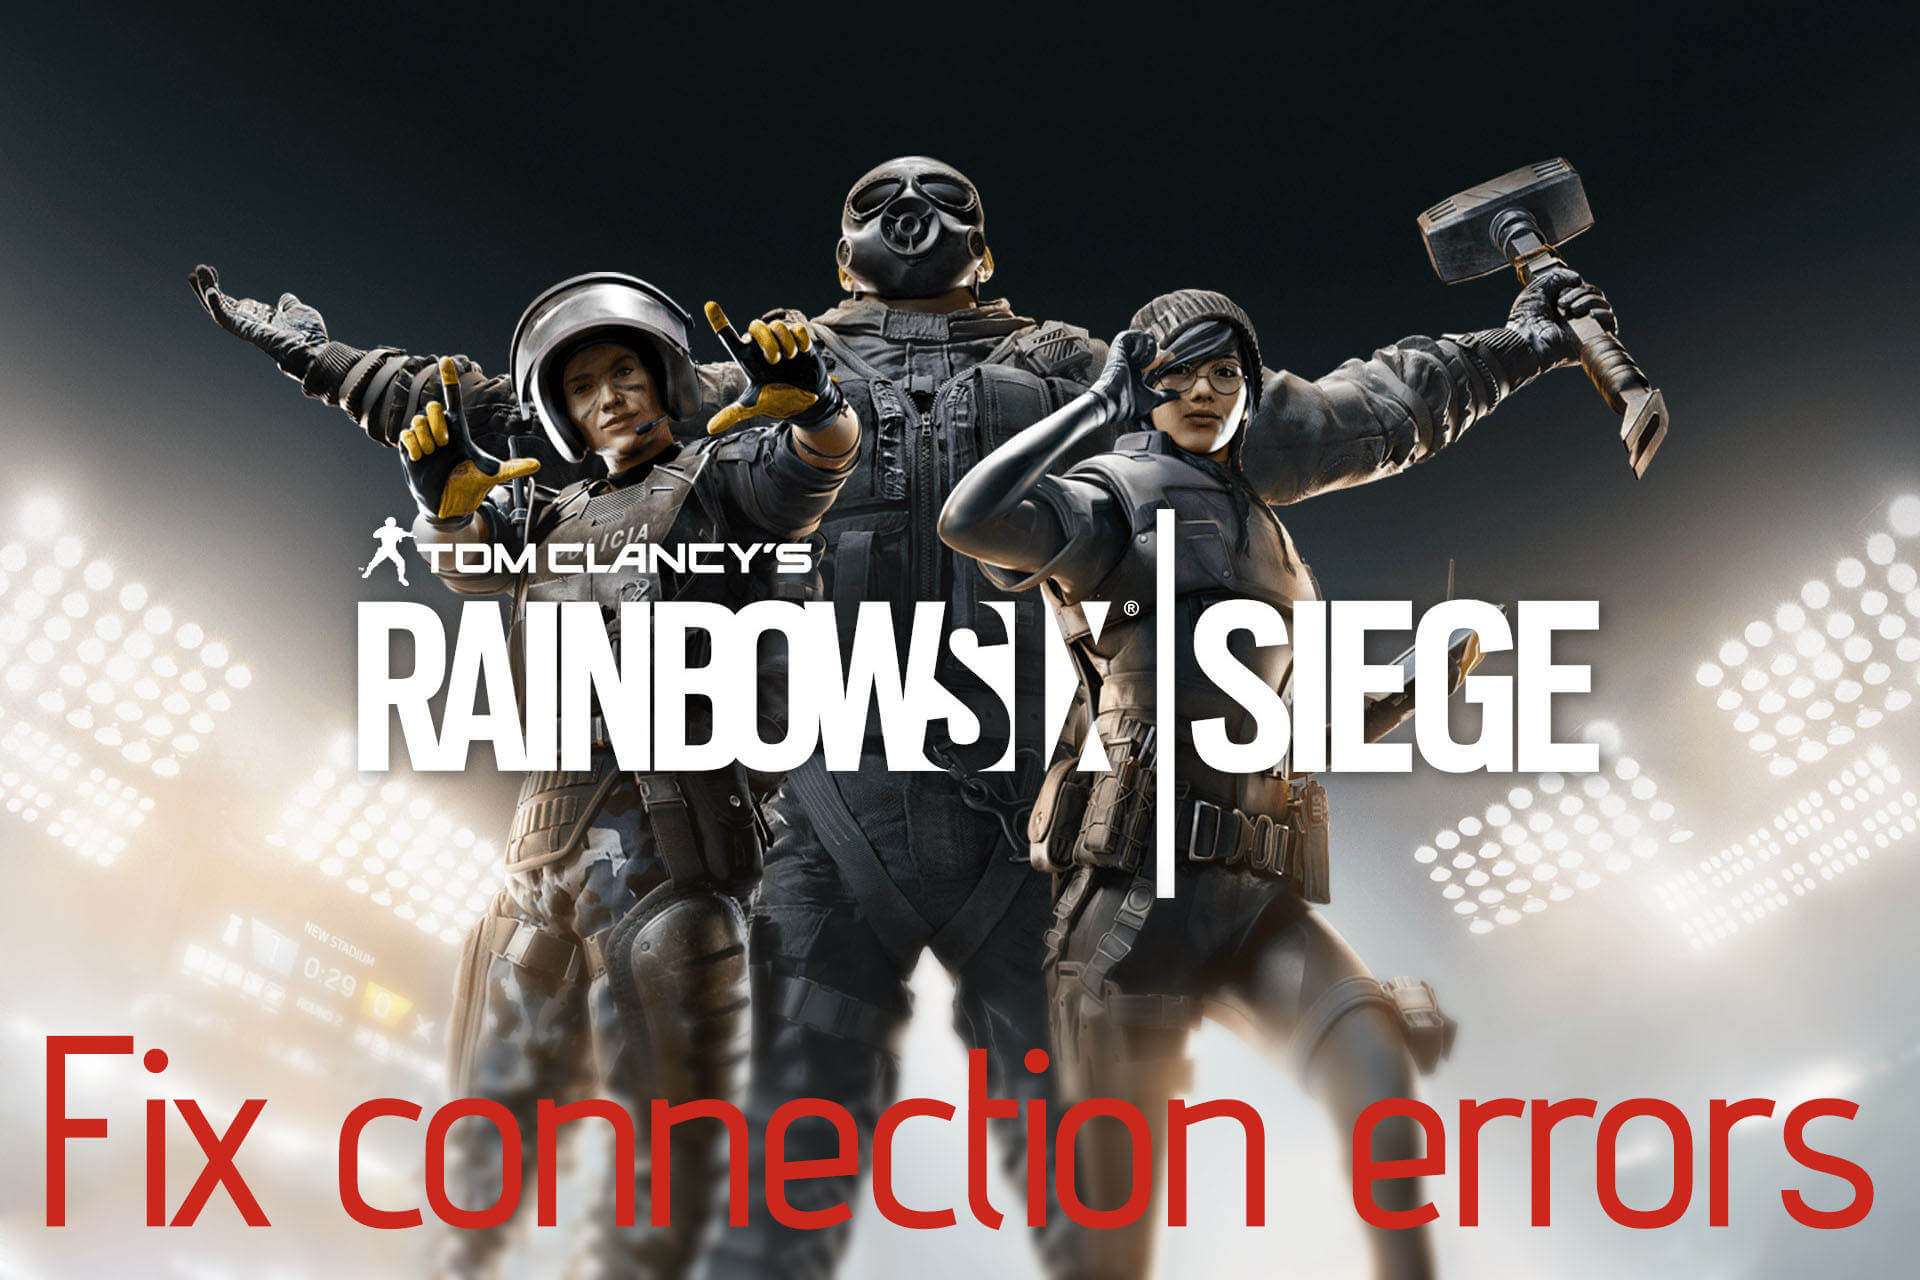 Rainbow Six Siege Connection Errors Fix Guide